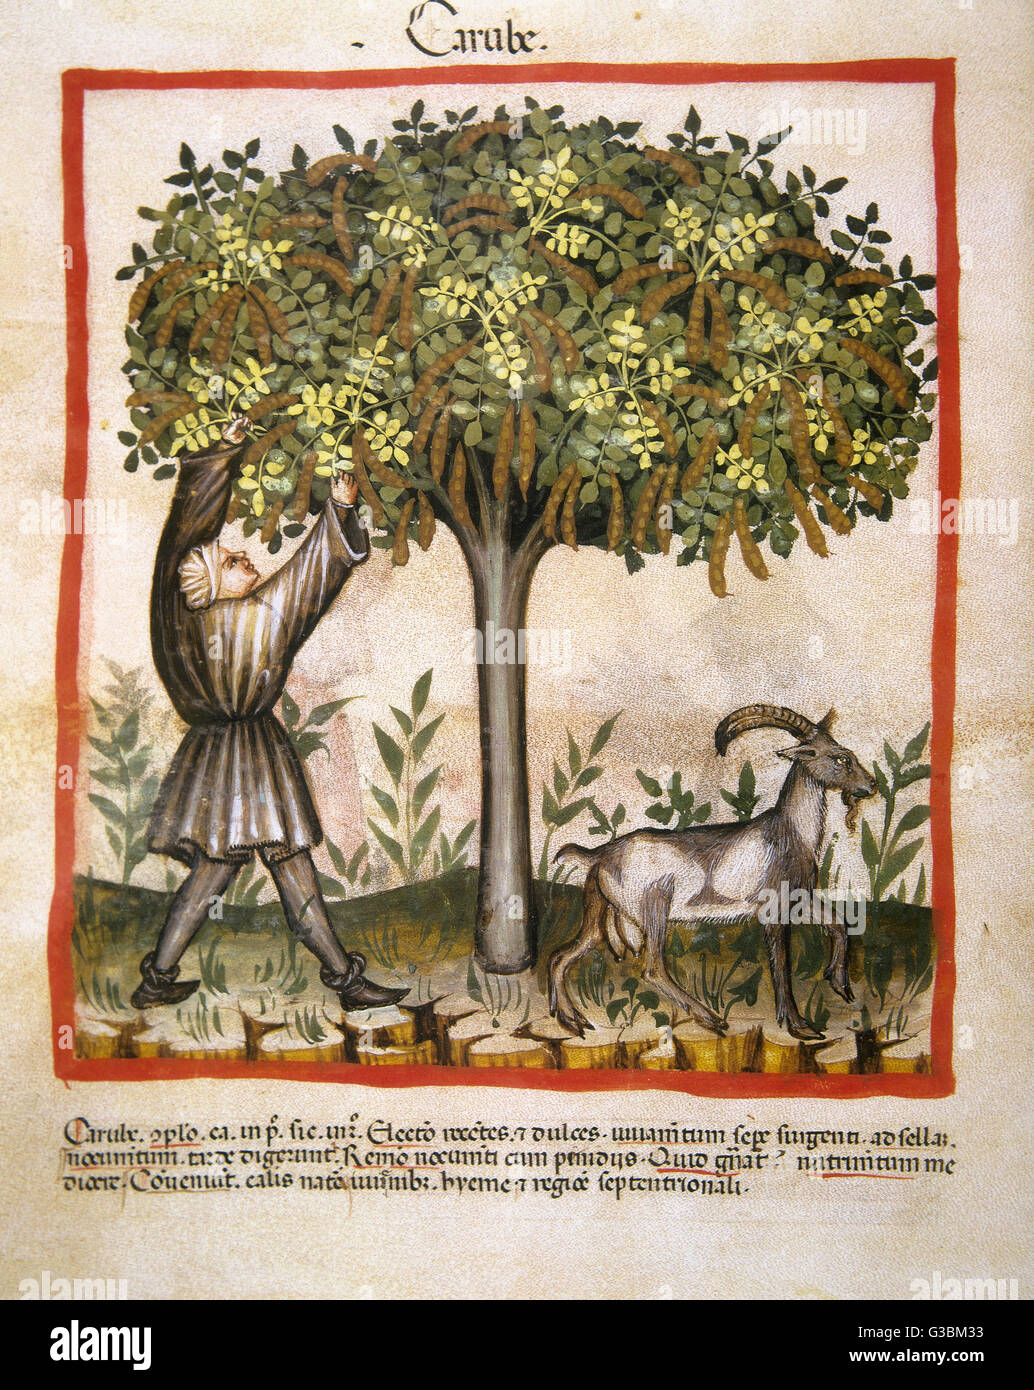 Tacuinum Sanitatis. Il XIV secolo. Manuale medievale di salute. La carruba. Folio 14v. Foto Stock